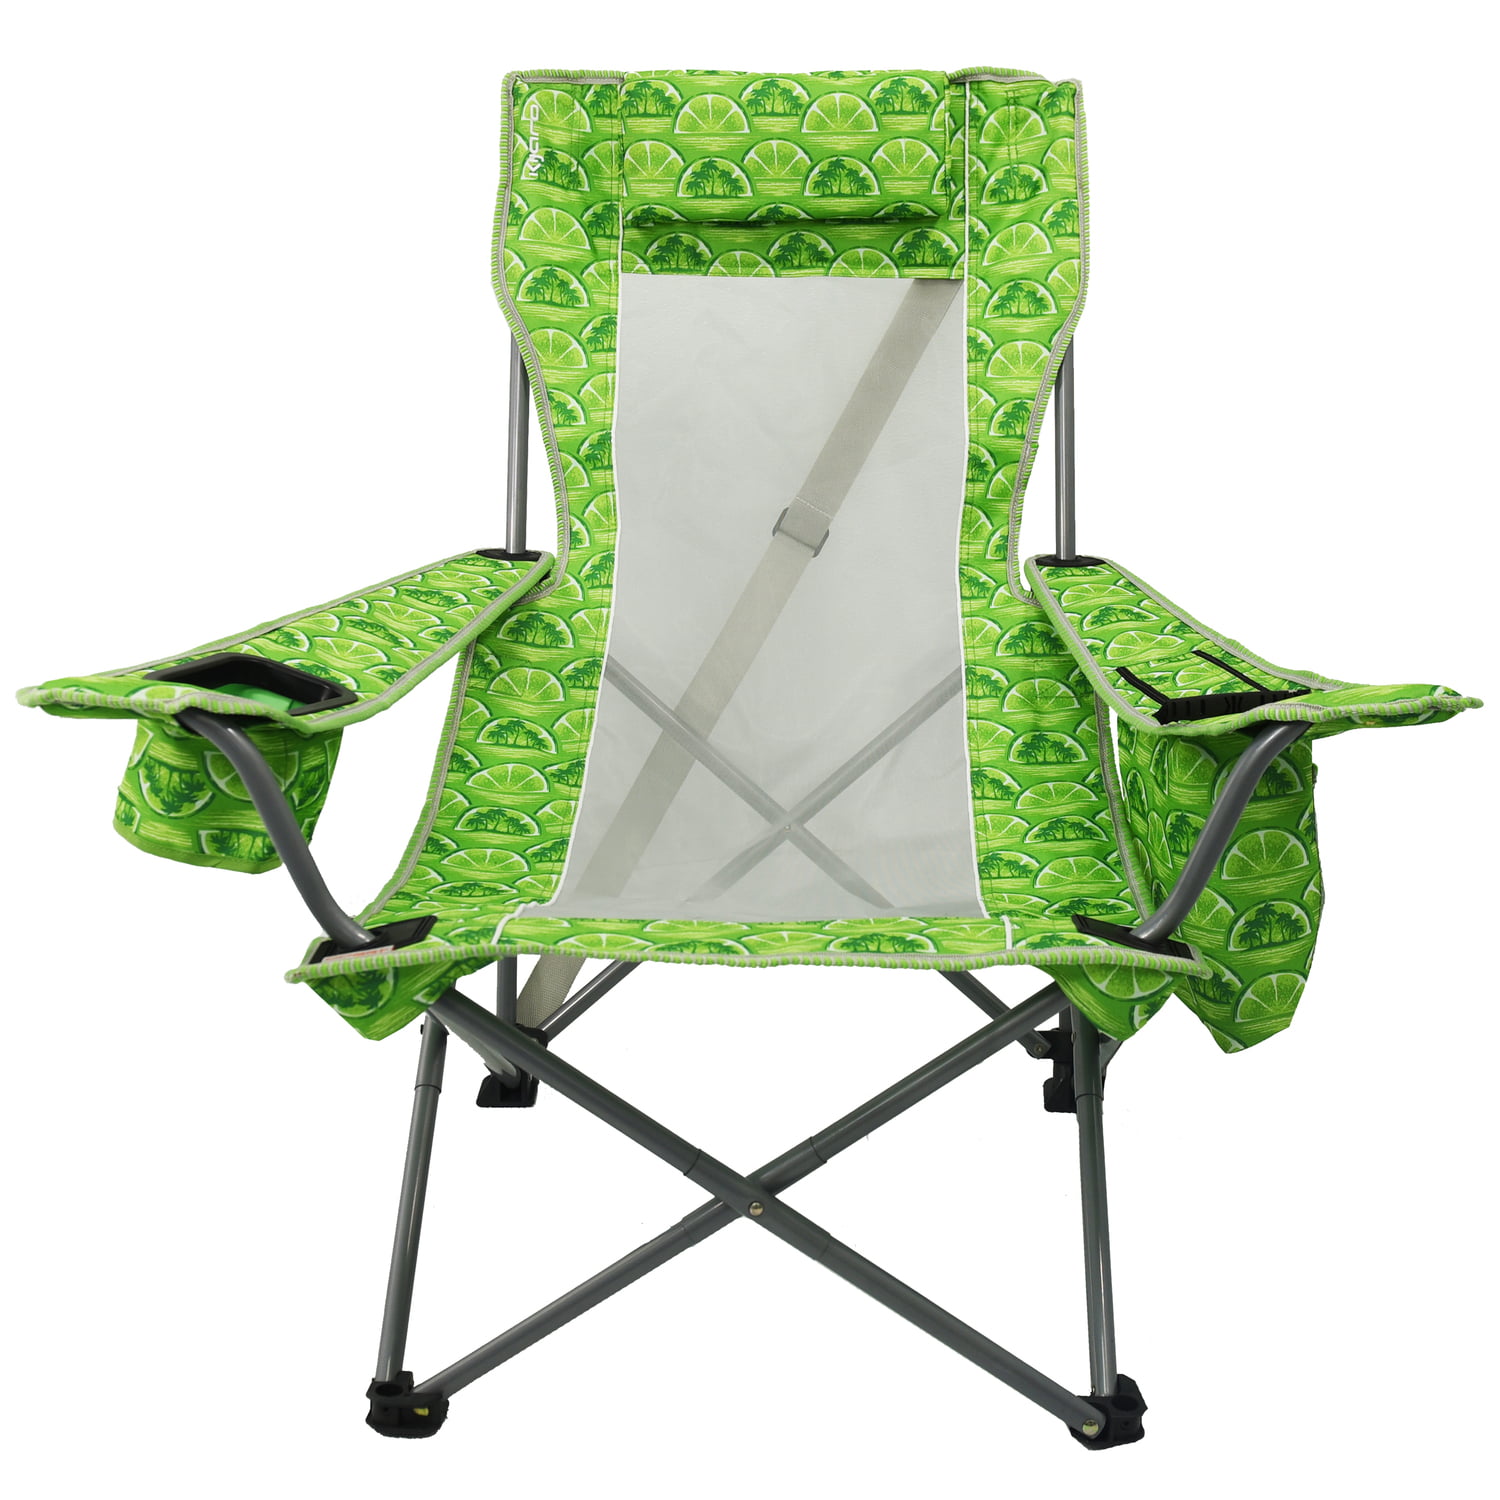 New Kijaro Beach Sling Chair 